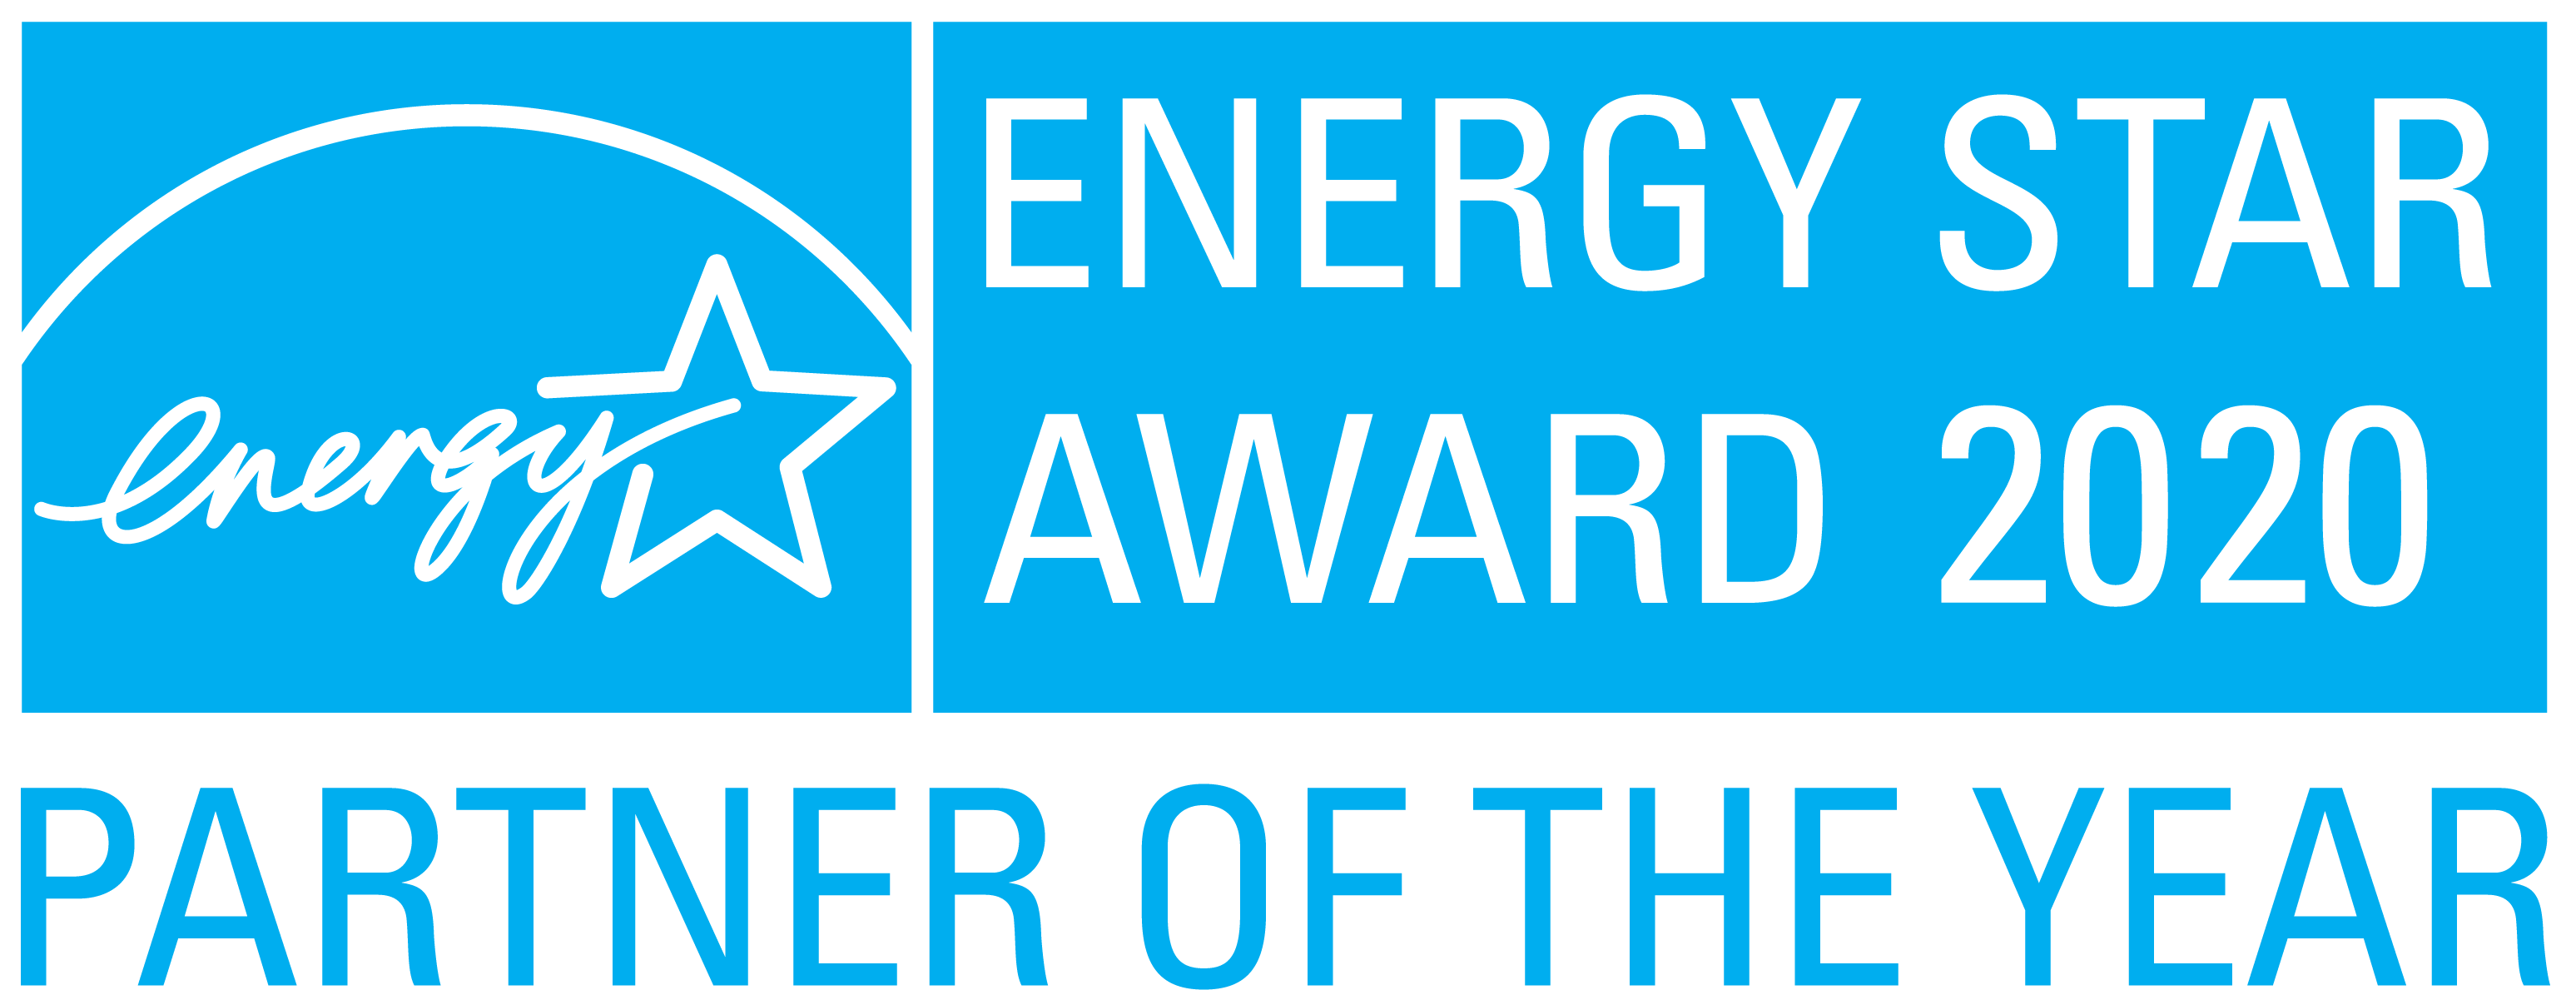 2020 Energy Star Partner of the Year Award